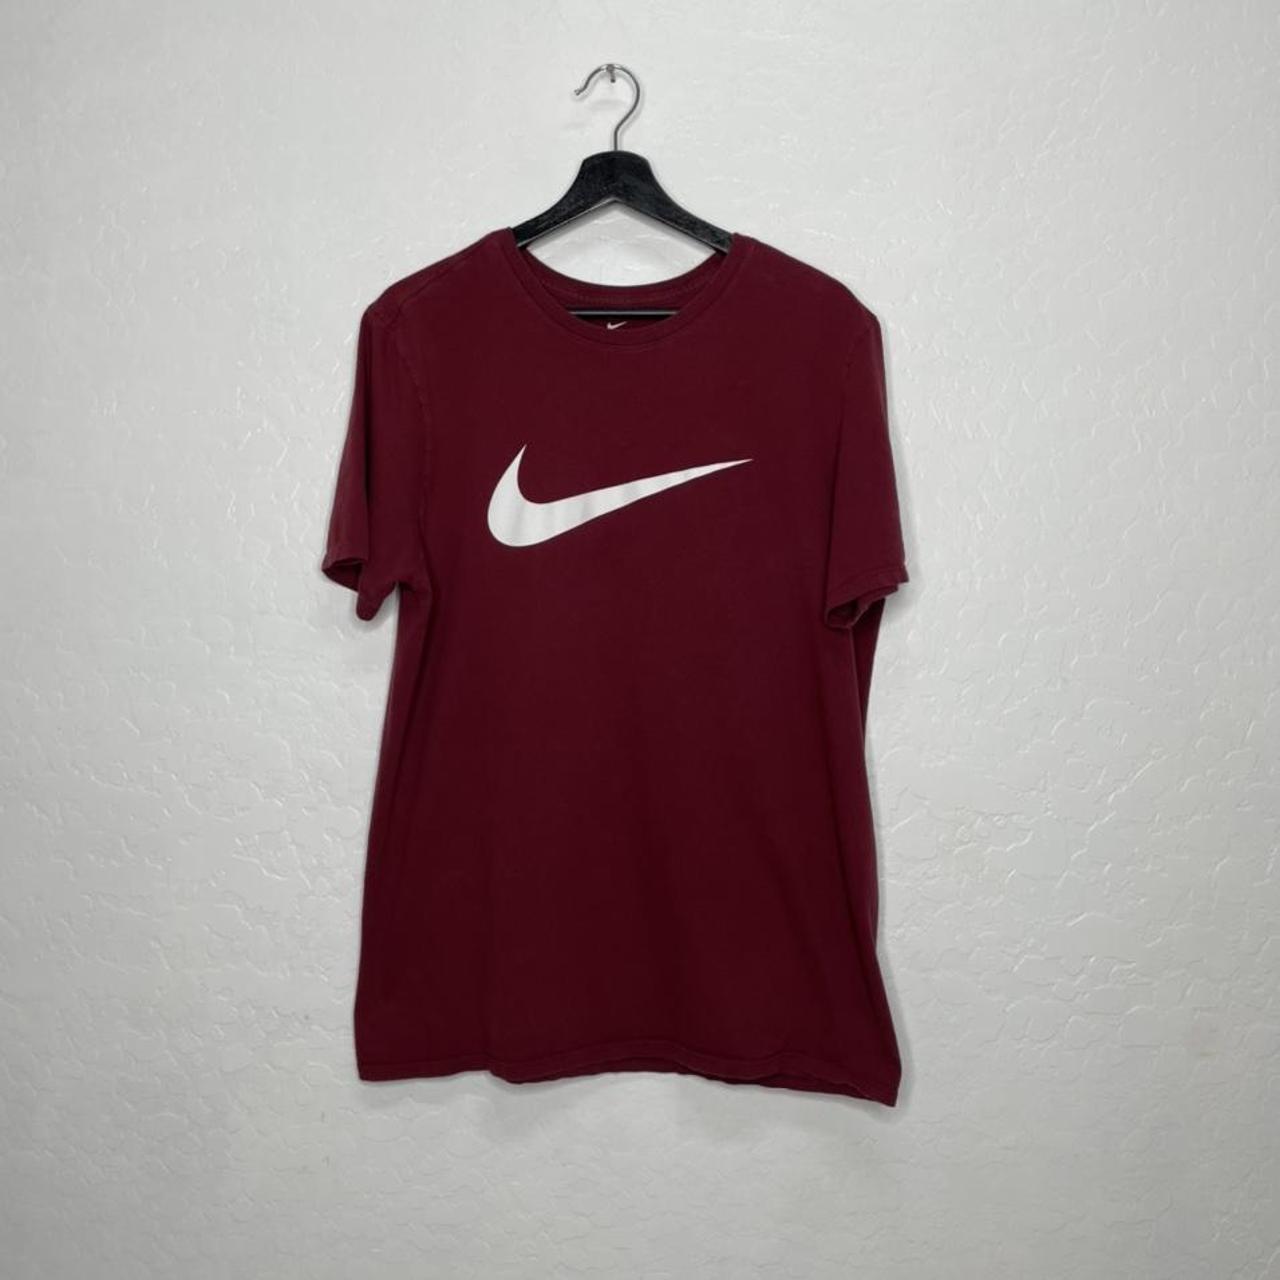 Nike Men's Burgundy and White T-shirt | Depop